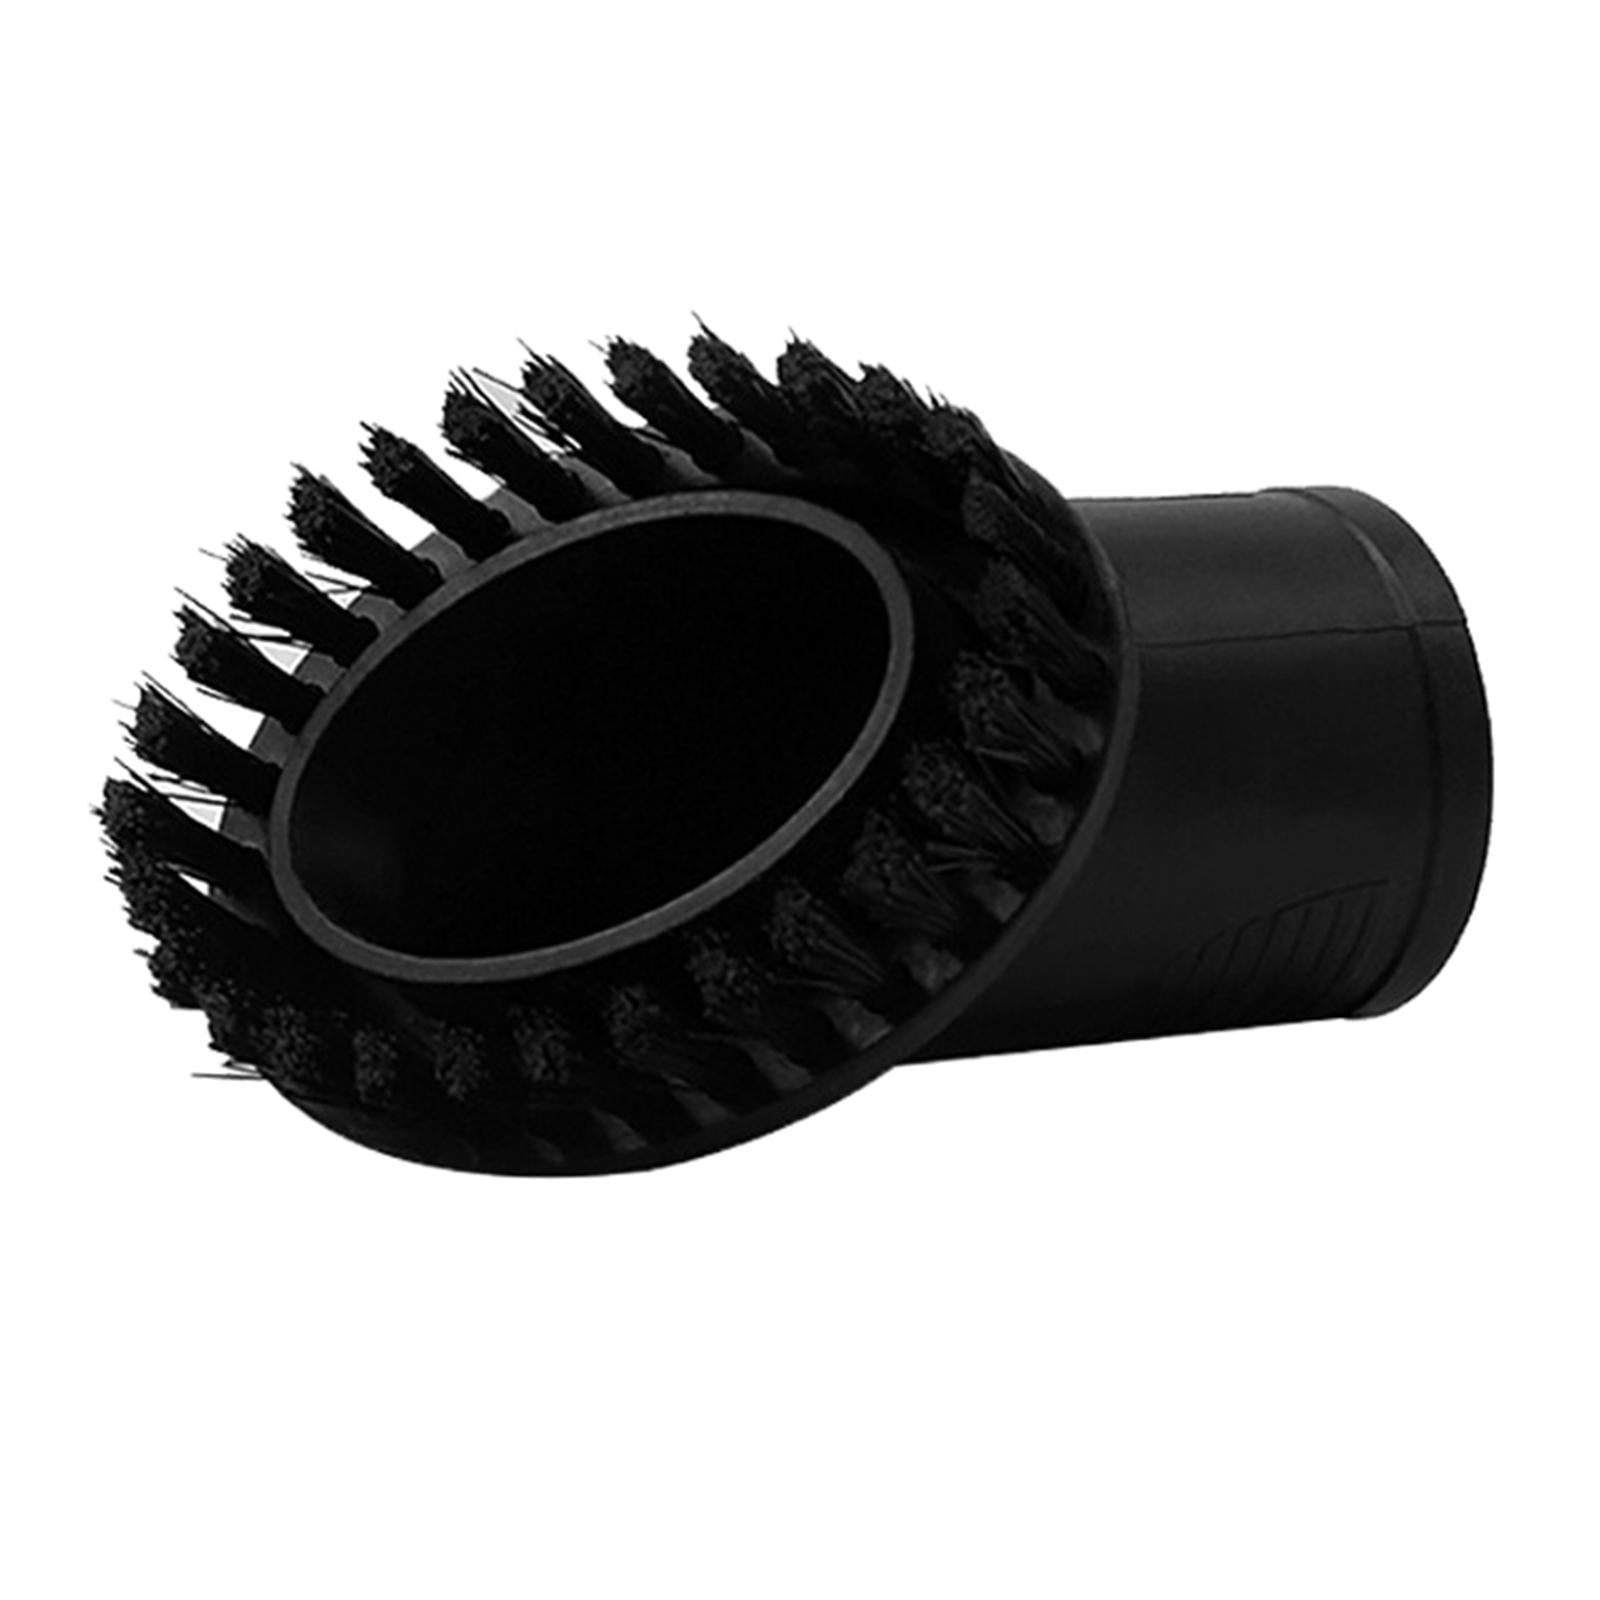 32mm/1.25" Dia Oval Dust Brush Dusting Tool Vacuum Cleaner Attachment Black 